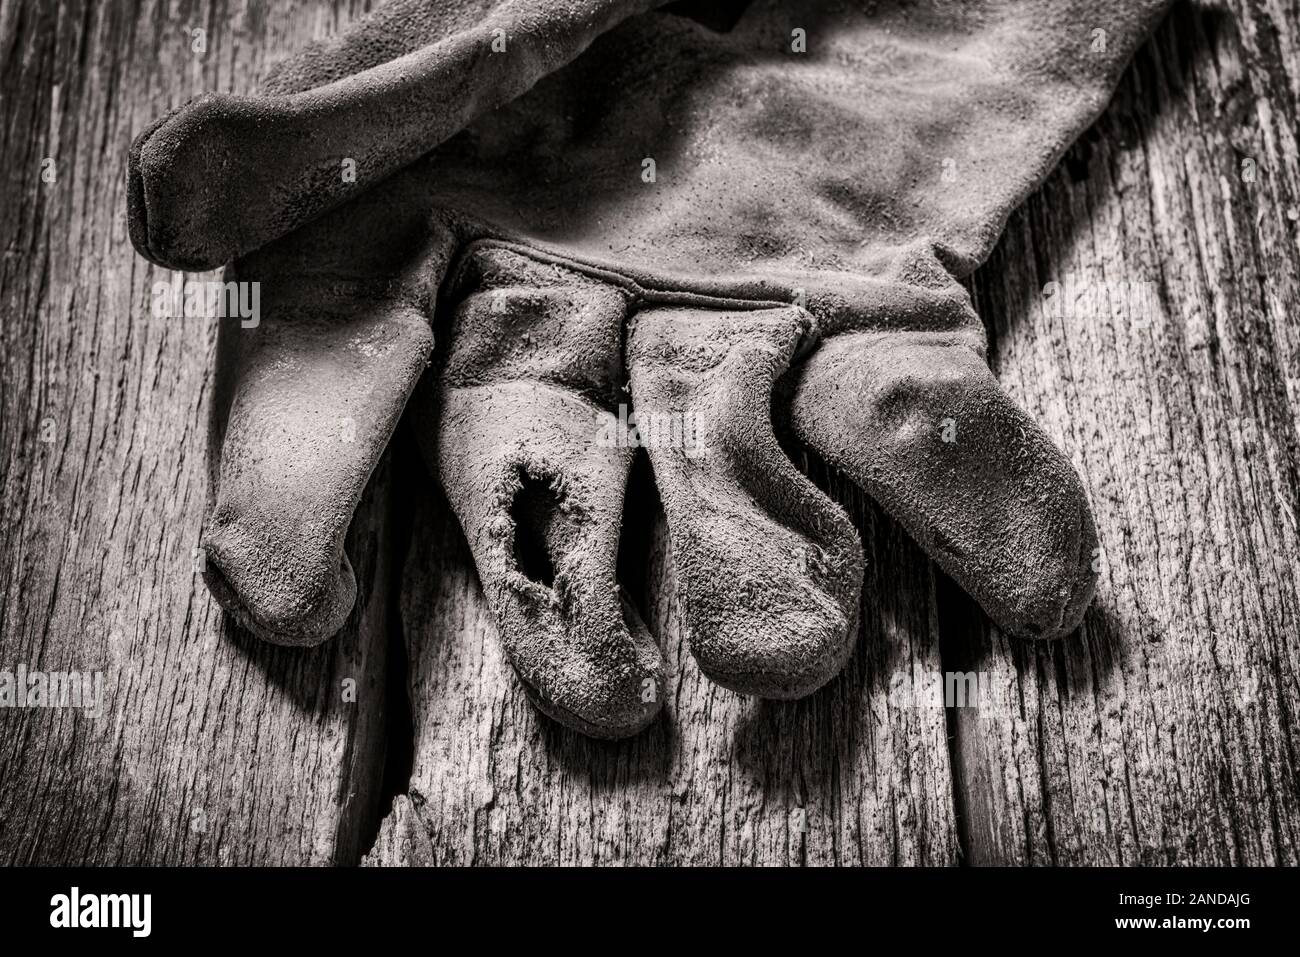 Black & white studio still life close-up of worn leather work gloves Stock Photo